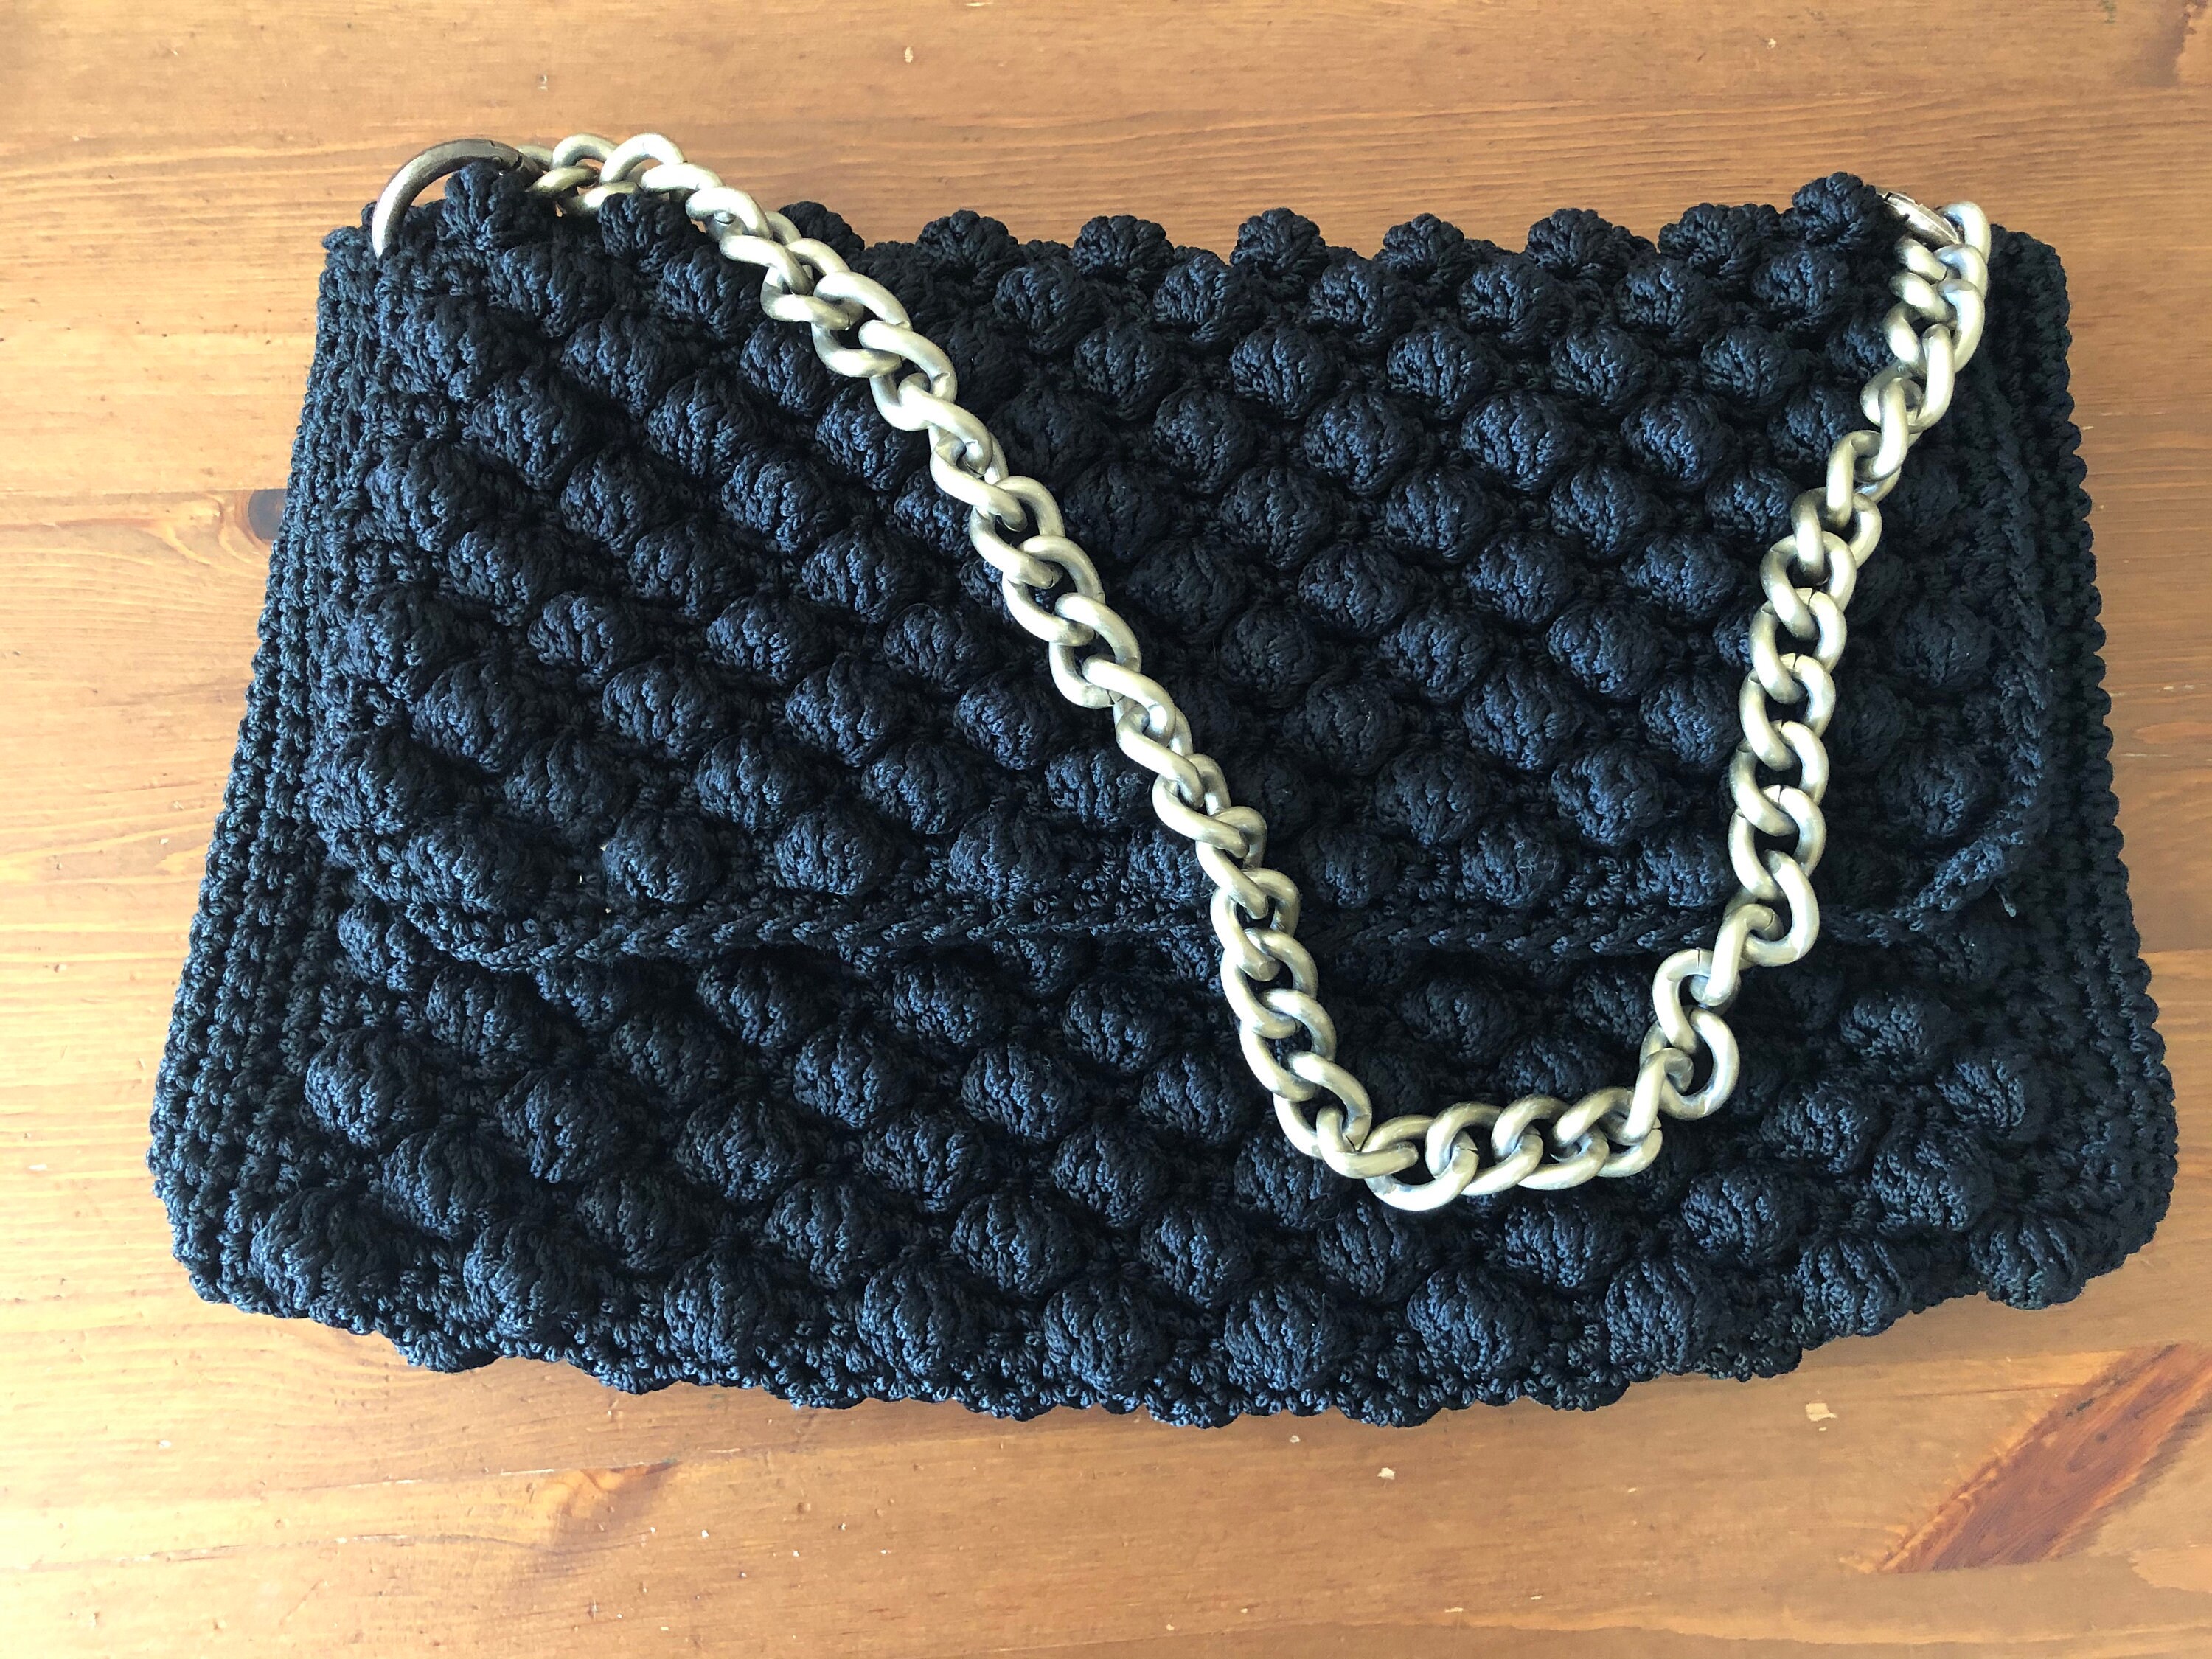 Wholesale Handmade Cute Shoulder Bag Crochet Knit Bubble Tea Boba Bag From  m.